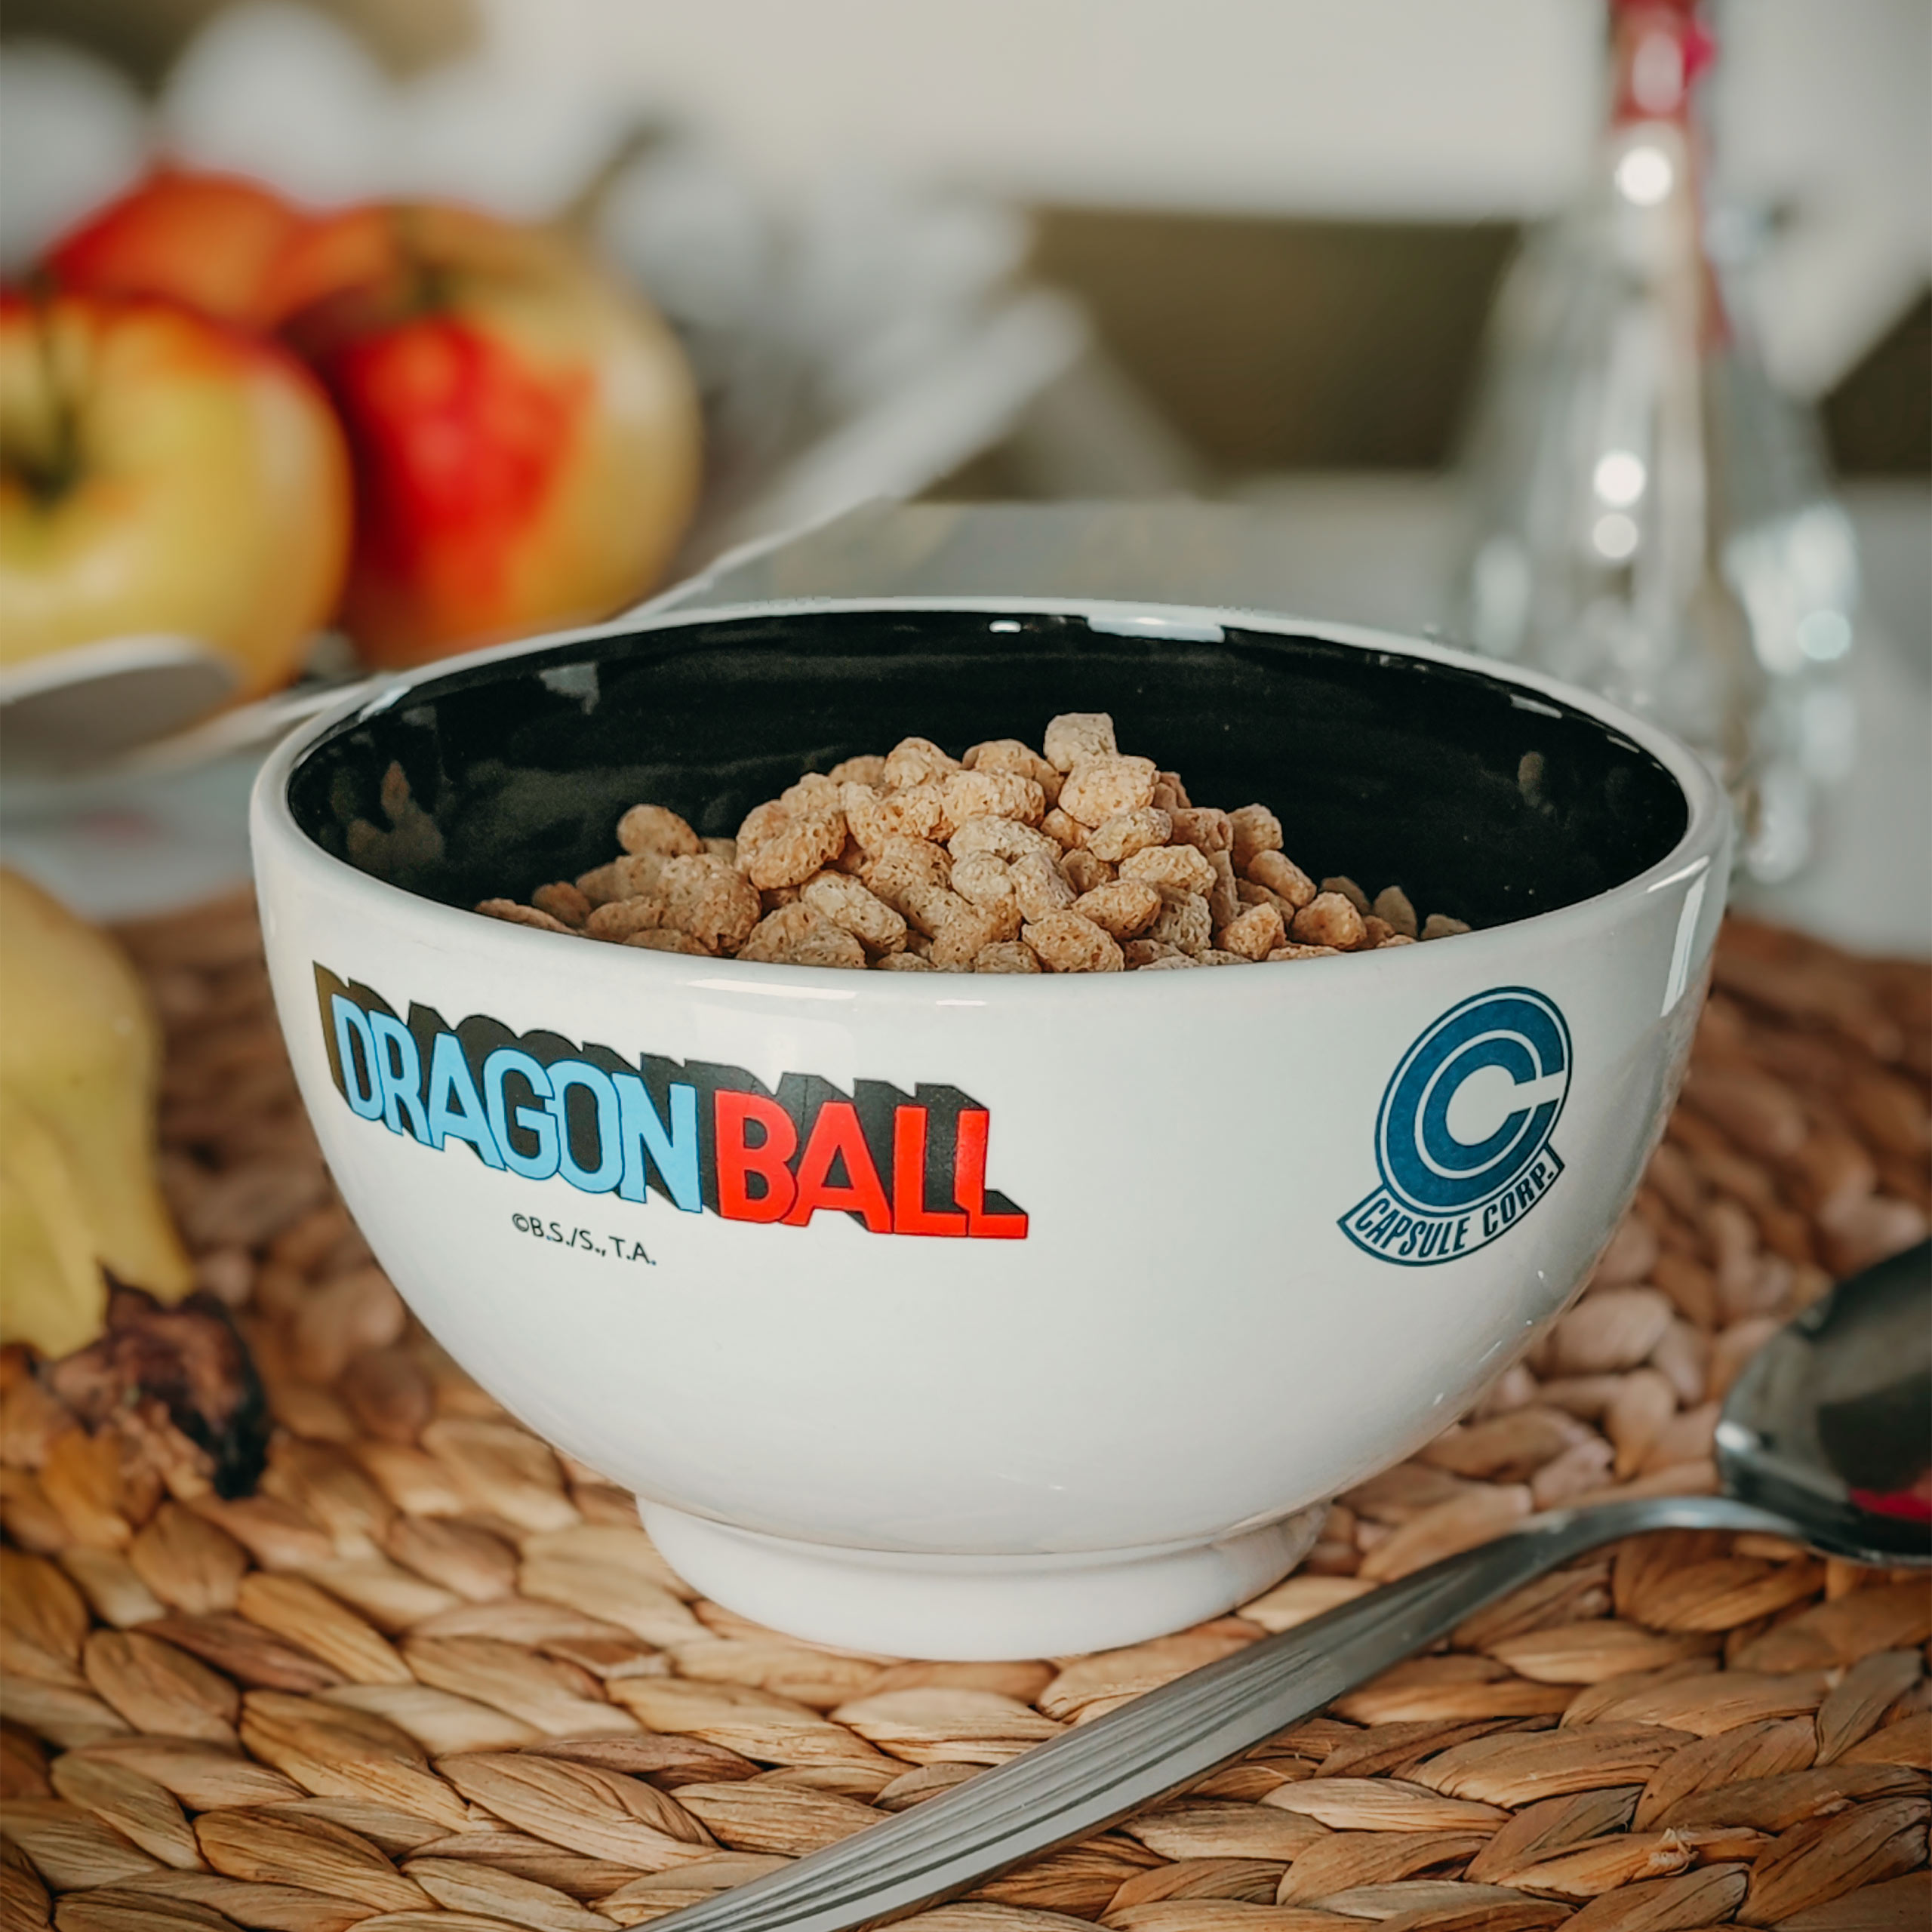 Dragon Ball - Iconen Ontbijtkom